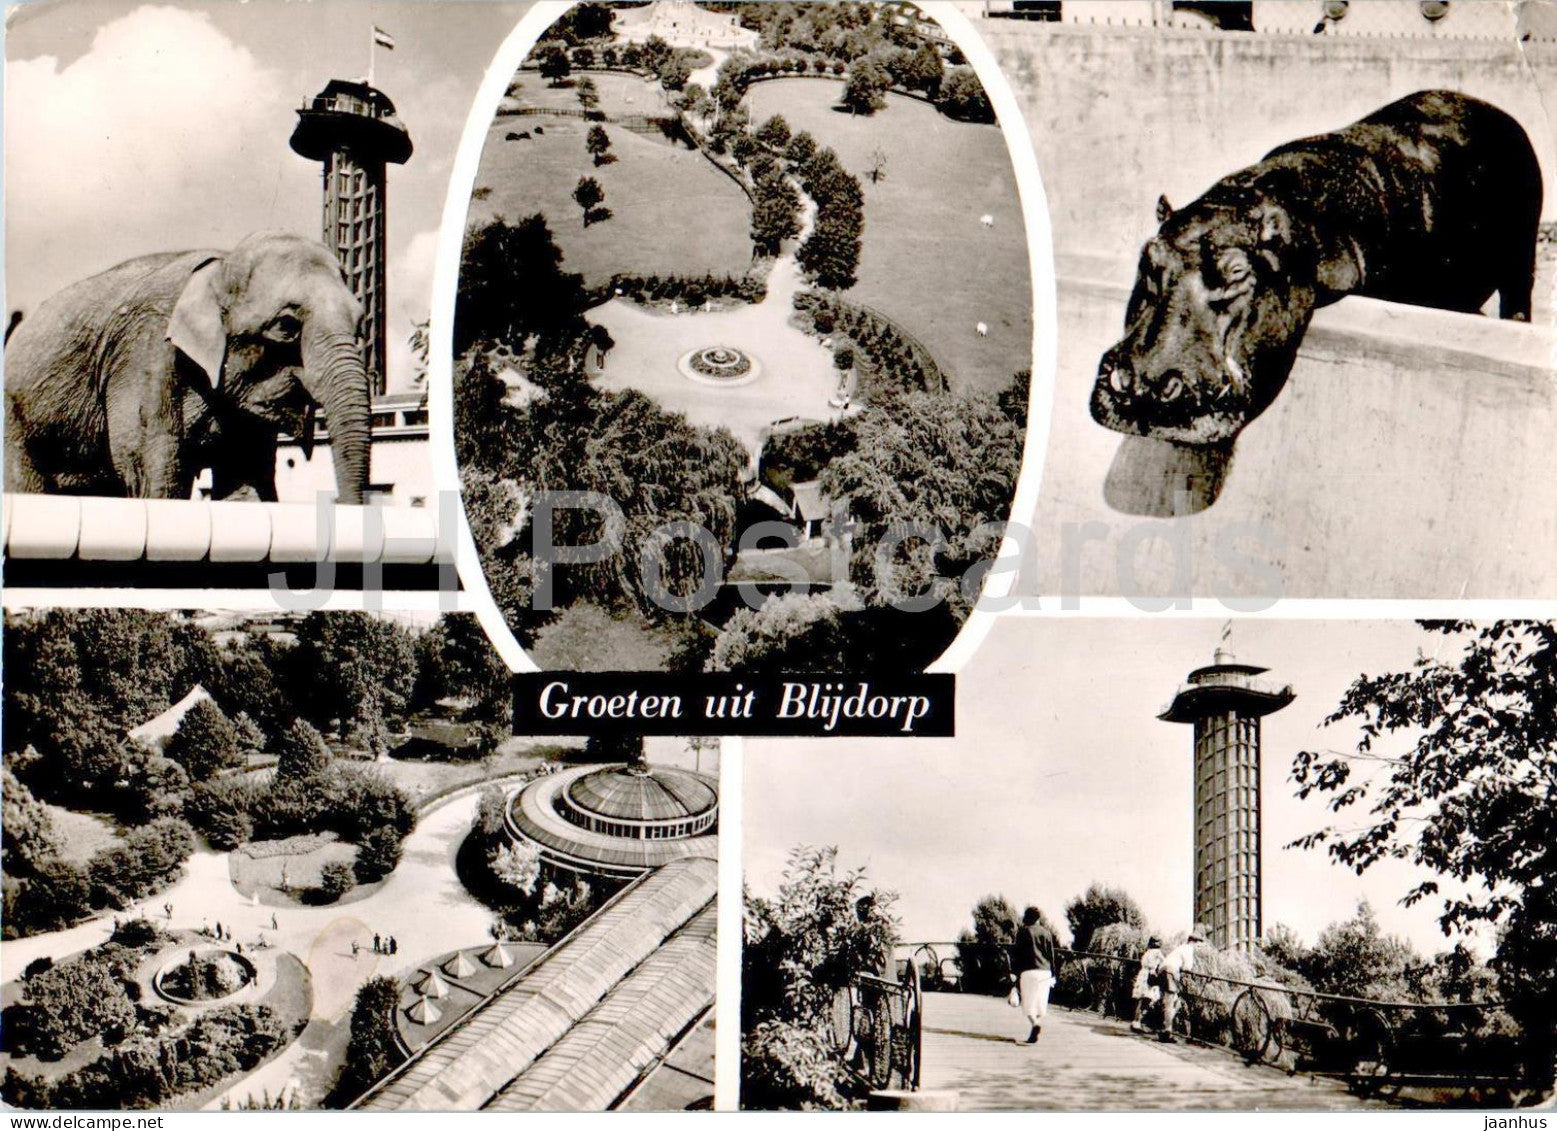 Rotterdam - Diergaarde Blijdorp - Zoo - animals - hippopotamus - elephant - 117 - 1960 - Netherlands - used - JH Postcards